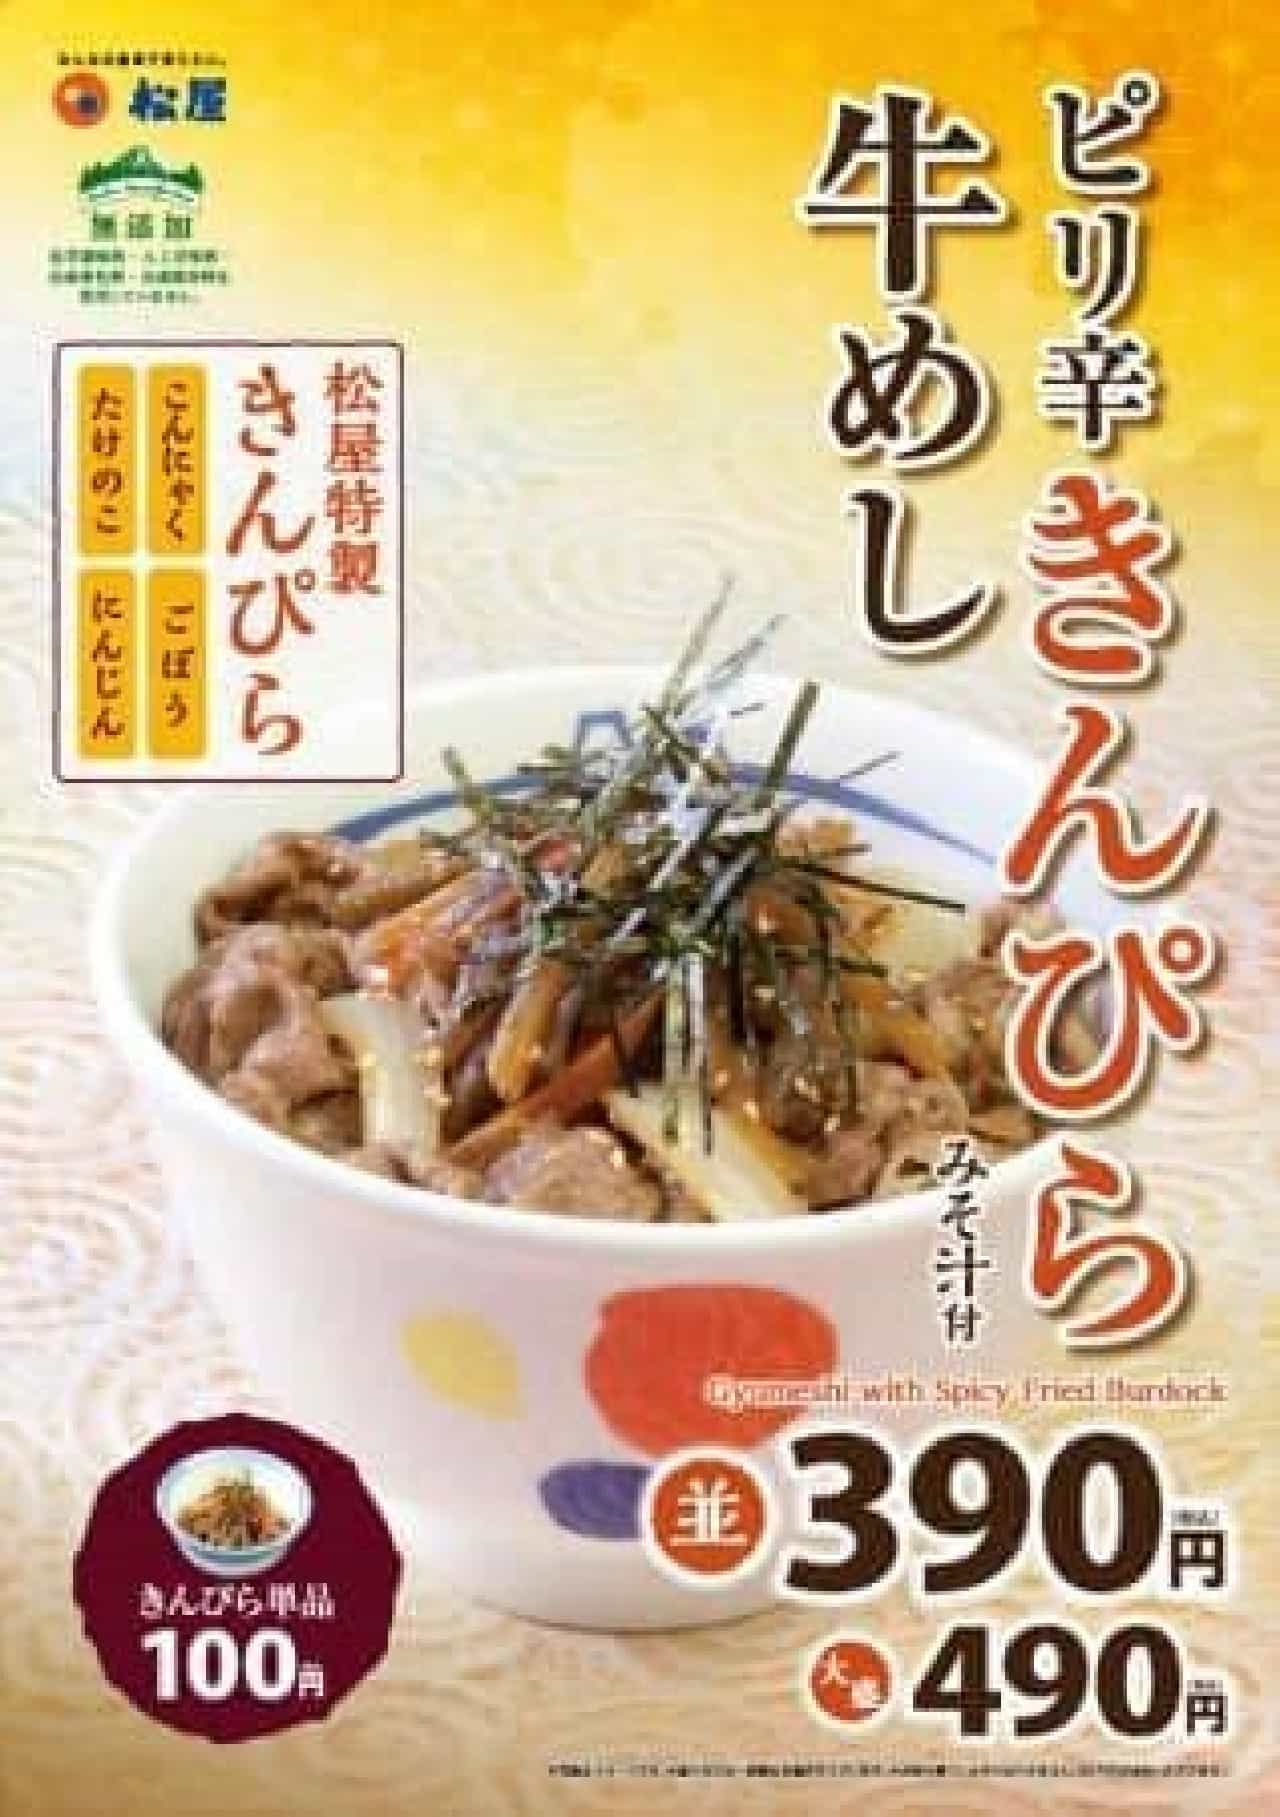 Turn on "Matsuya special Kinpira" for beef rice!